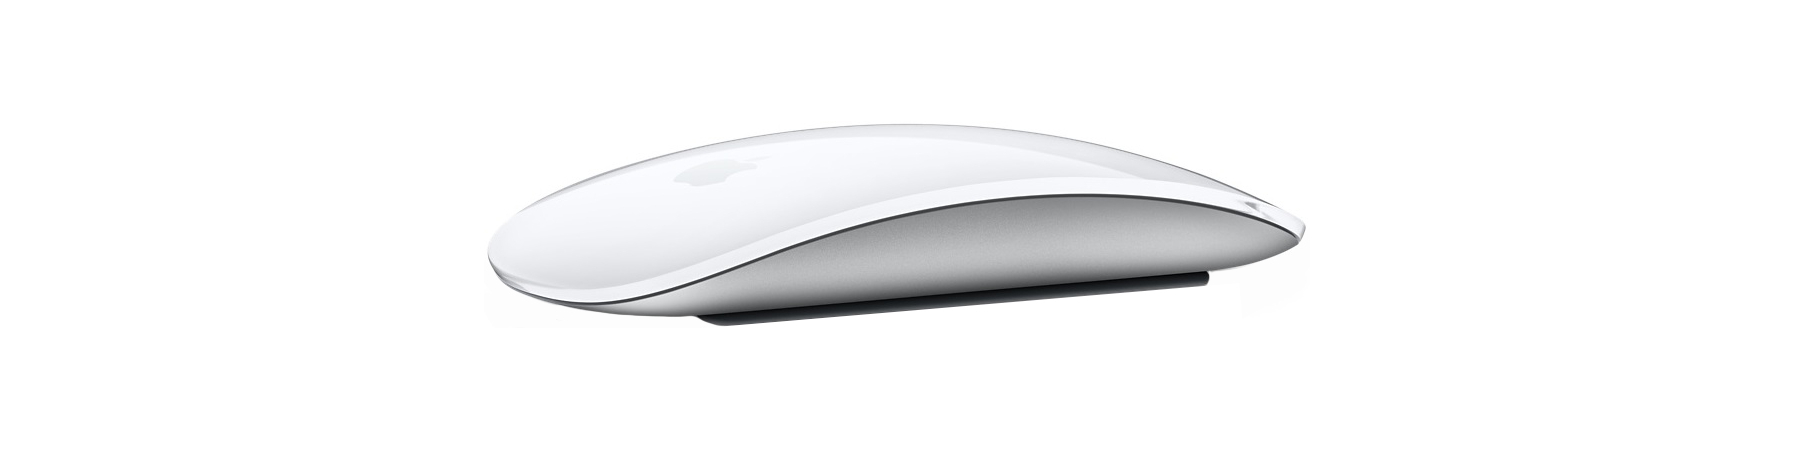 Apple Magic Mouse 3 White, Цвет: White / Белый